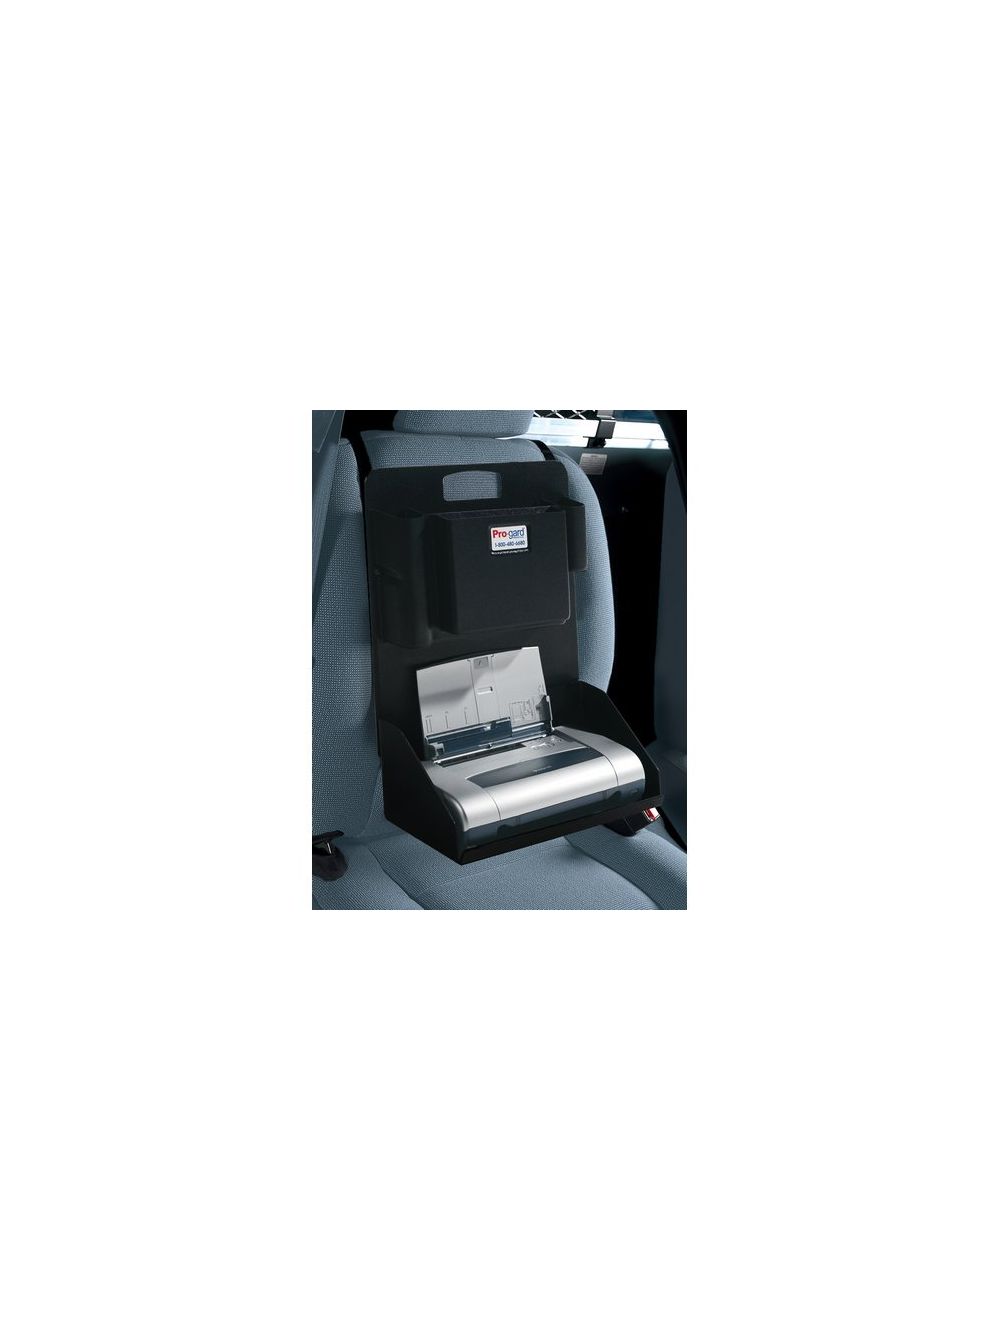 Dodge Ram 1500 SSV 2013 - 2021 Black ABS, Printer Deck, Portable, Seat Mounted, Duty Gear Organizer